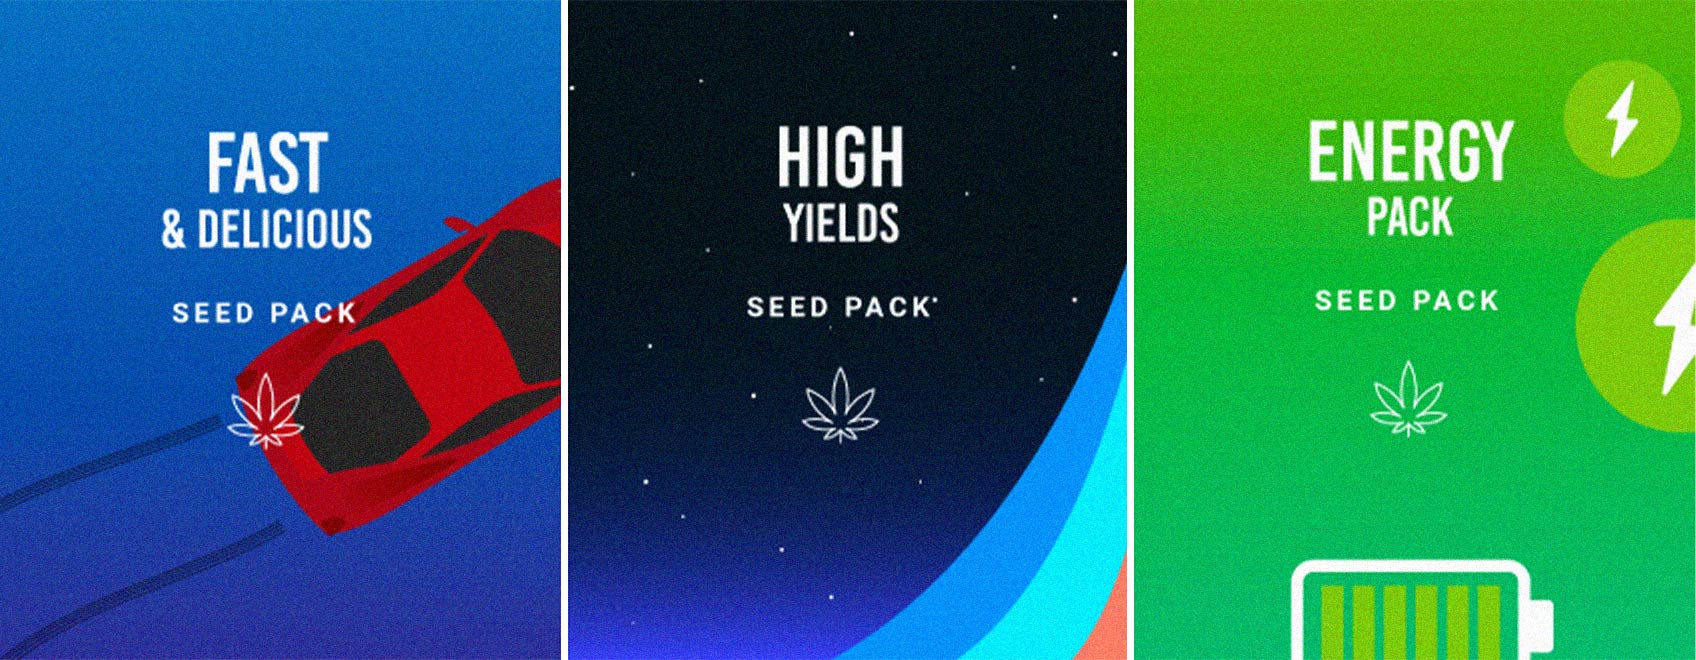 Royal Queen Seeds mix packs